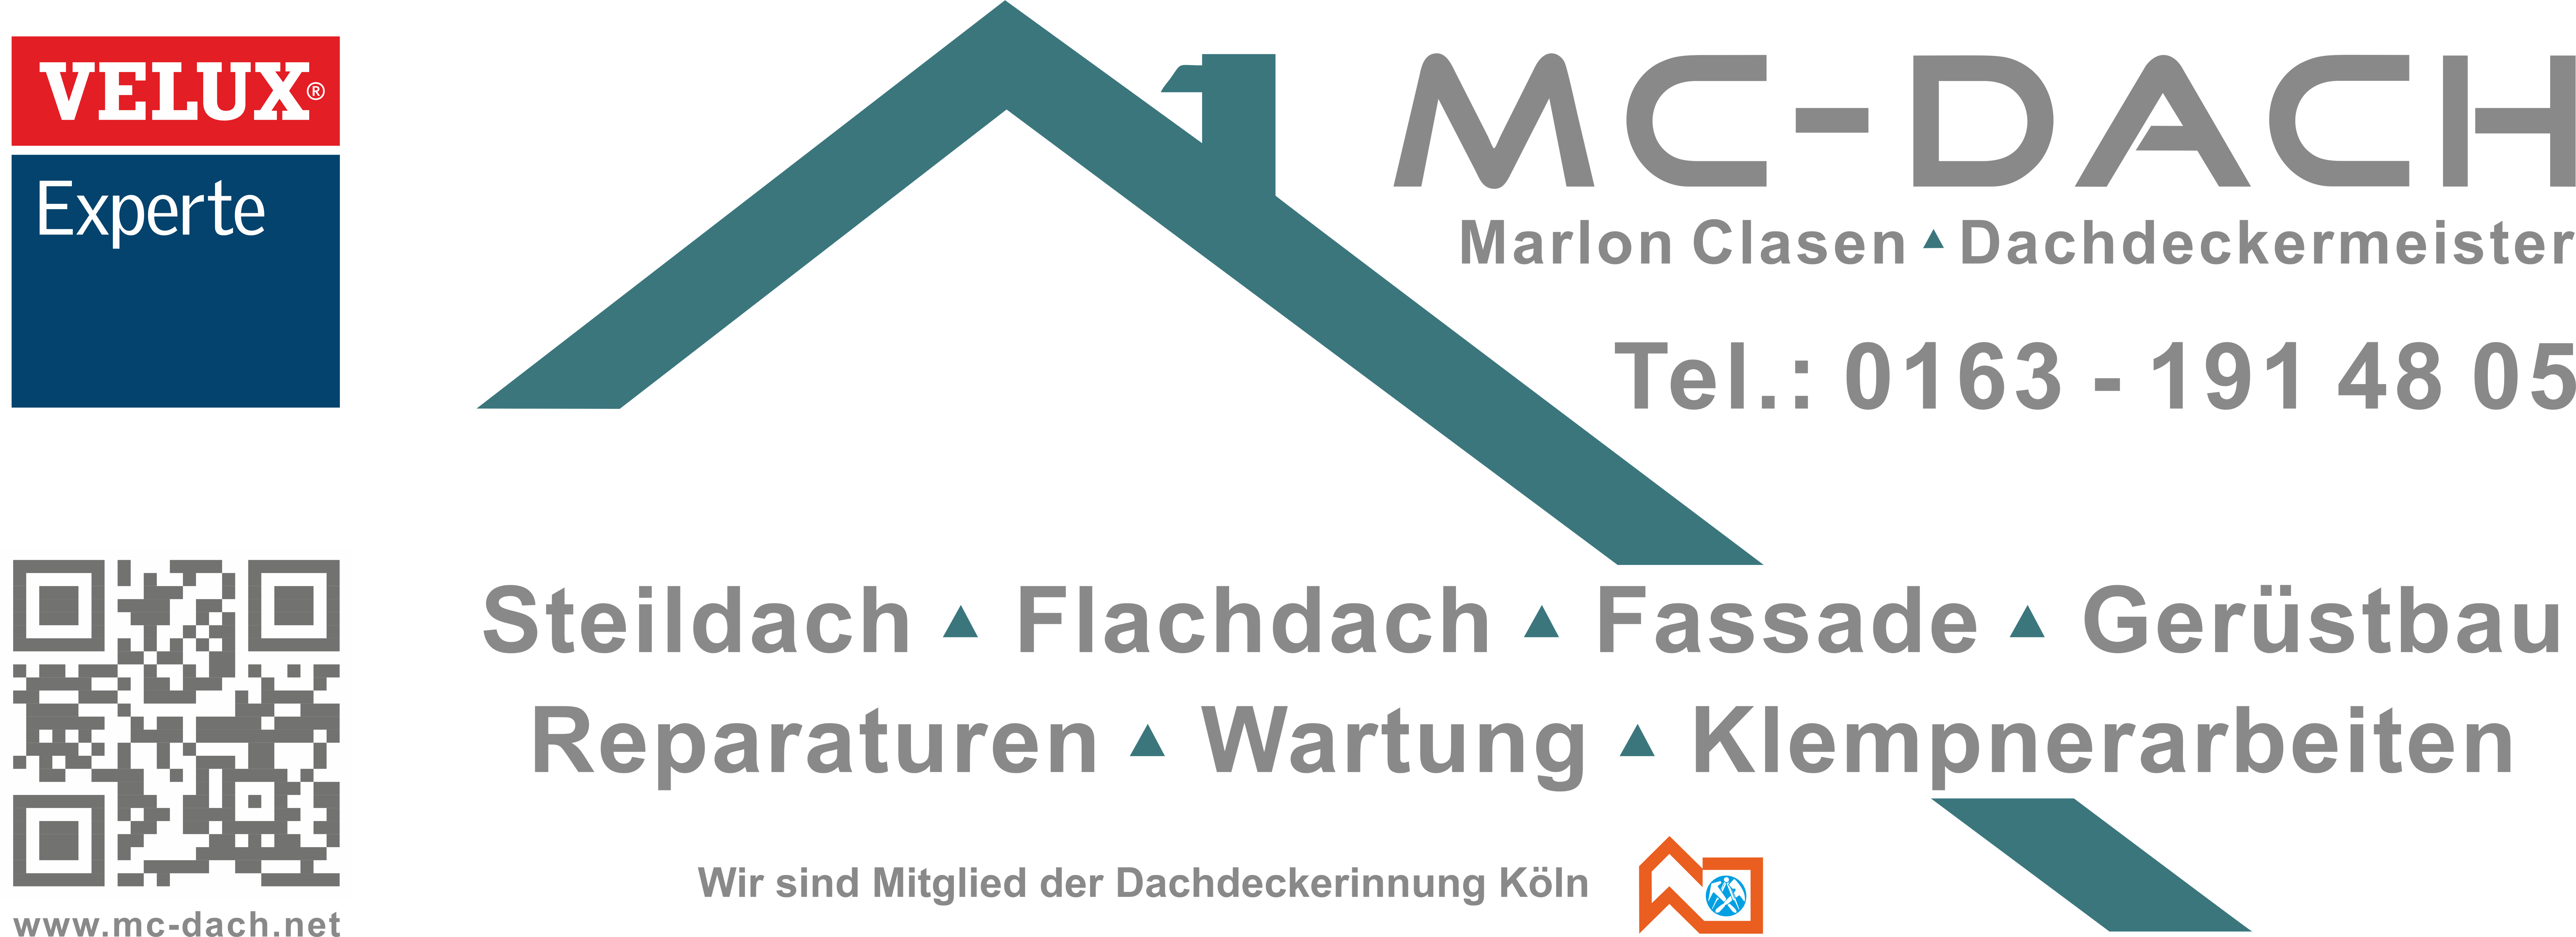 MC-Dach-weloivenetzwerk-1100x400mm